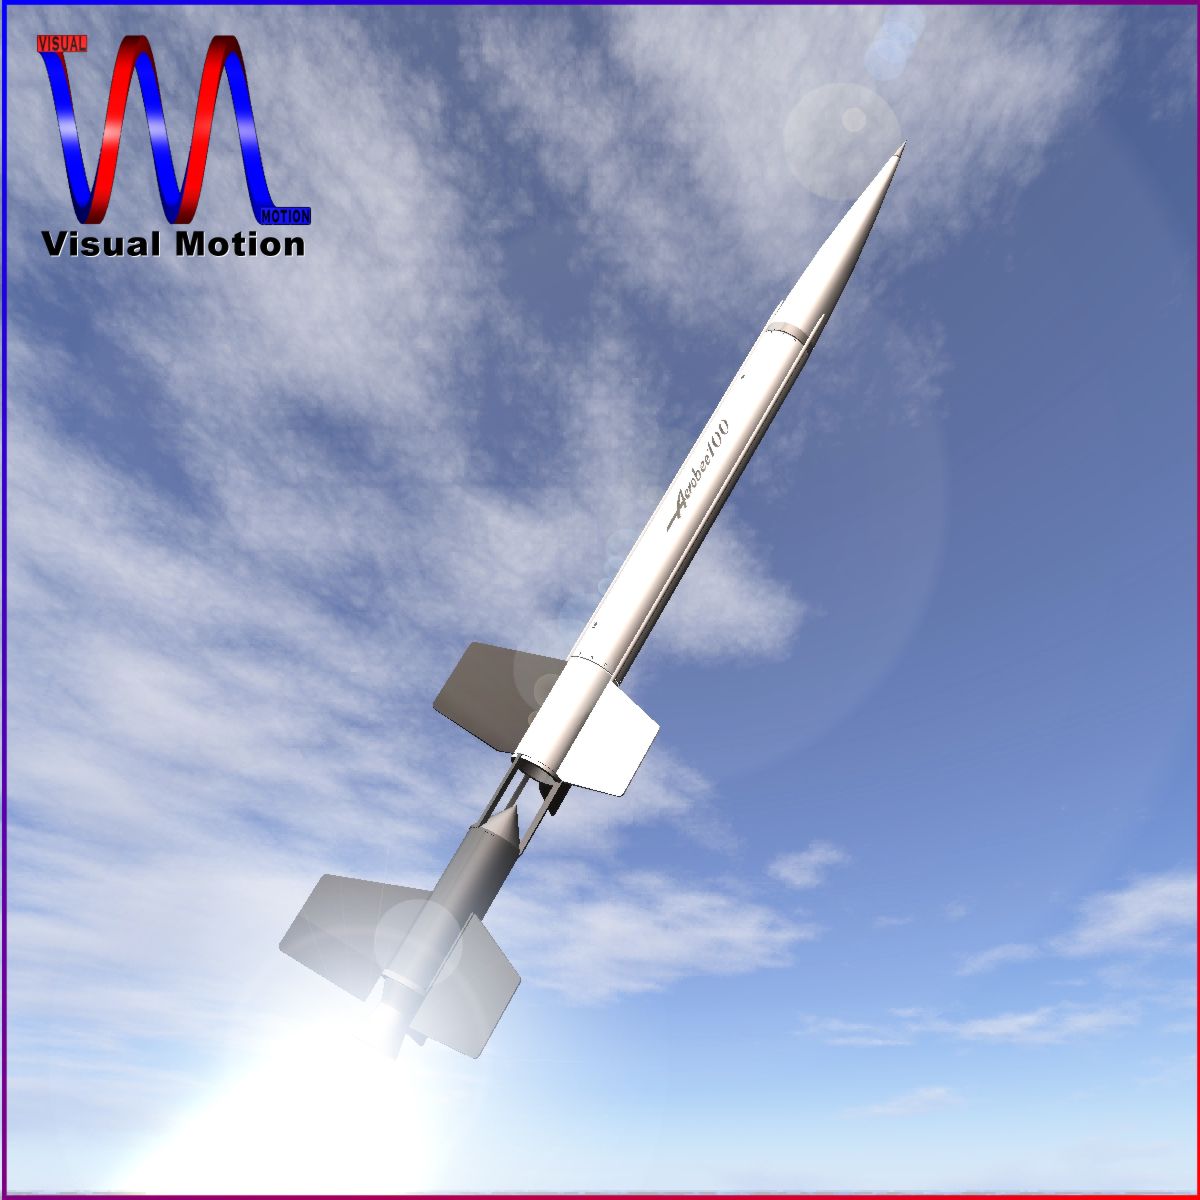 nasa aerobee 100 rocket 3d model 3ds dxf fbx blend cob dae x  obj 158429